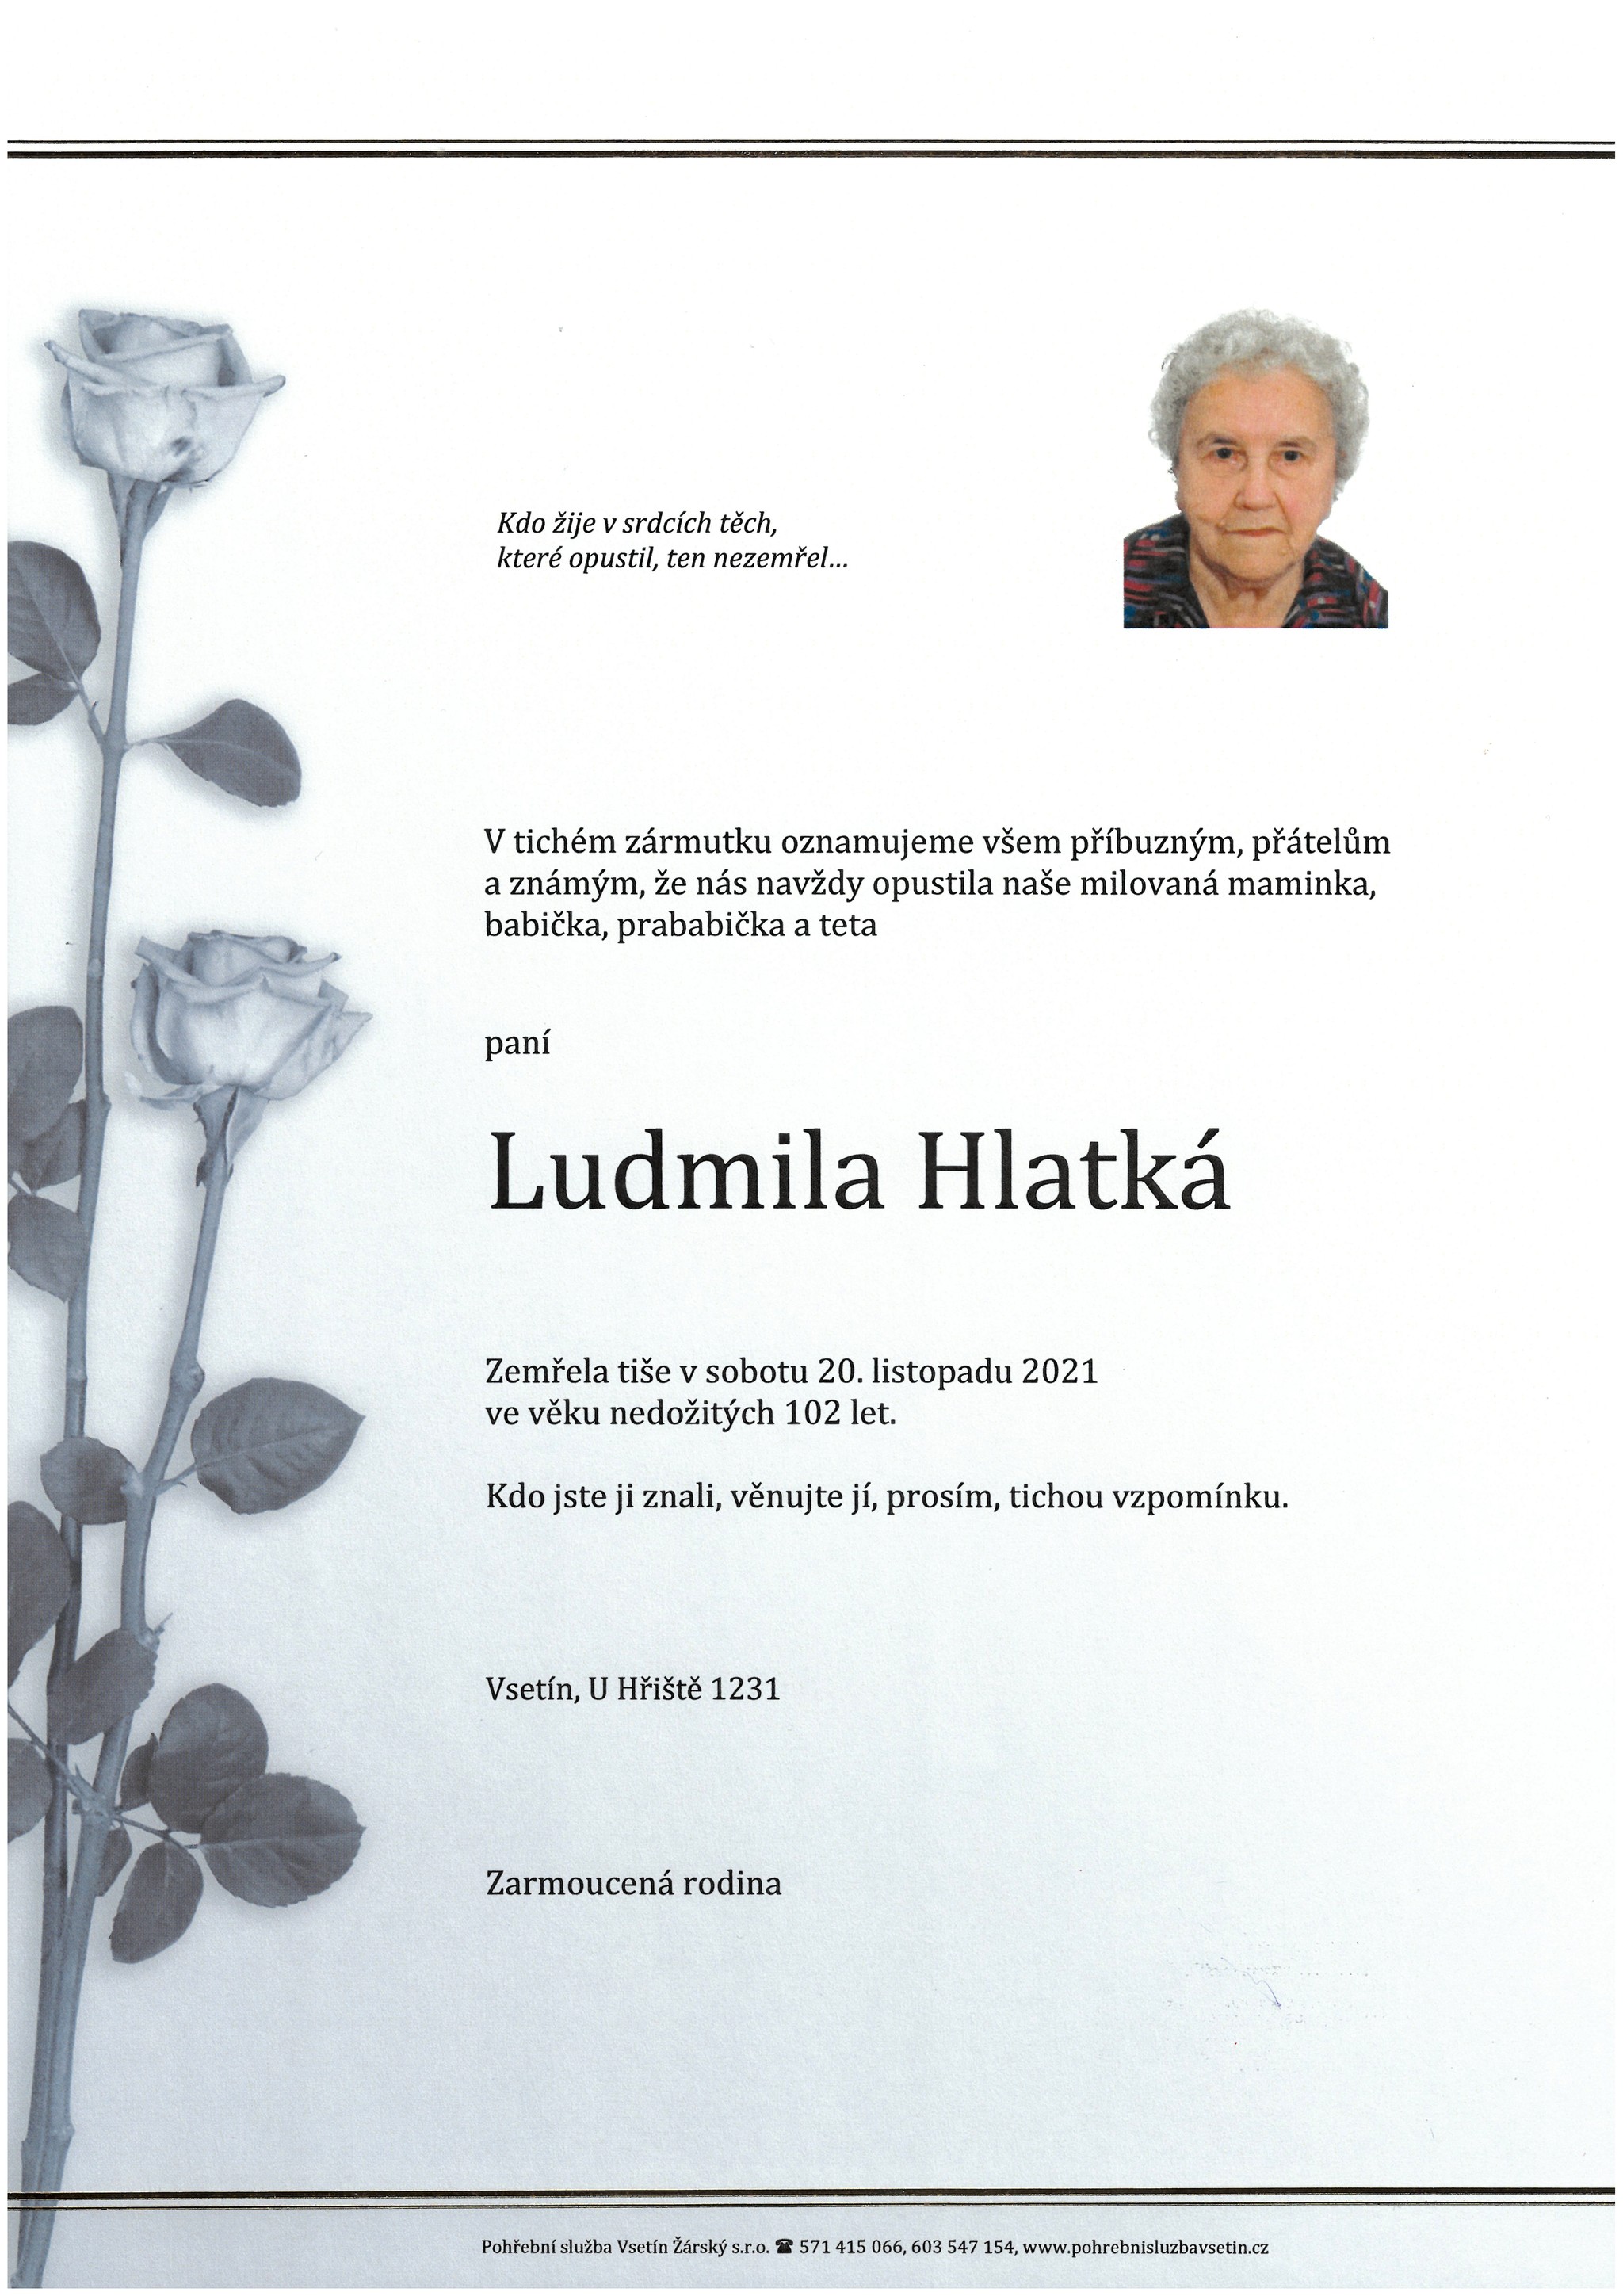 Ludmila Hlatká